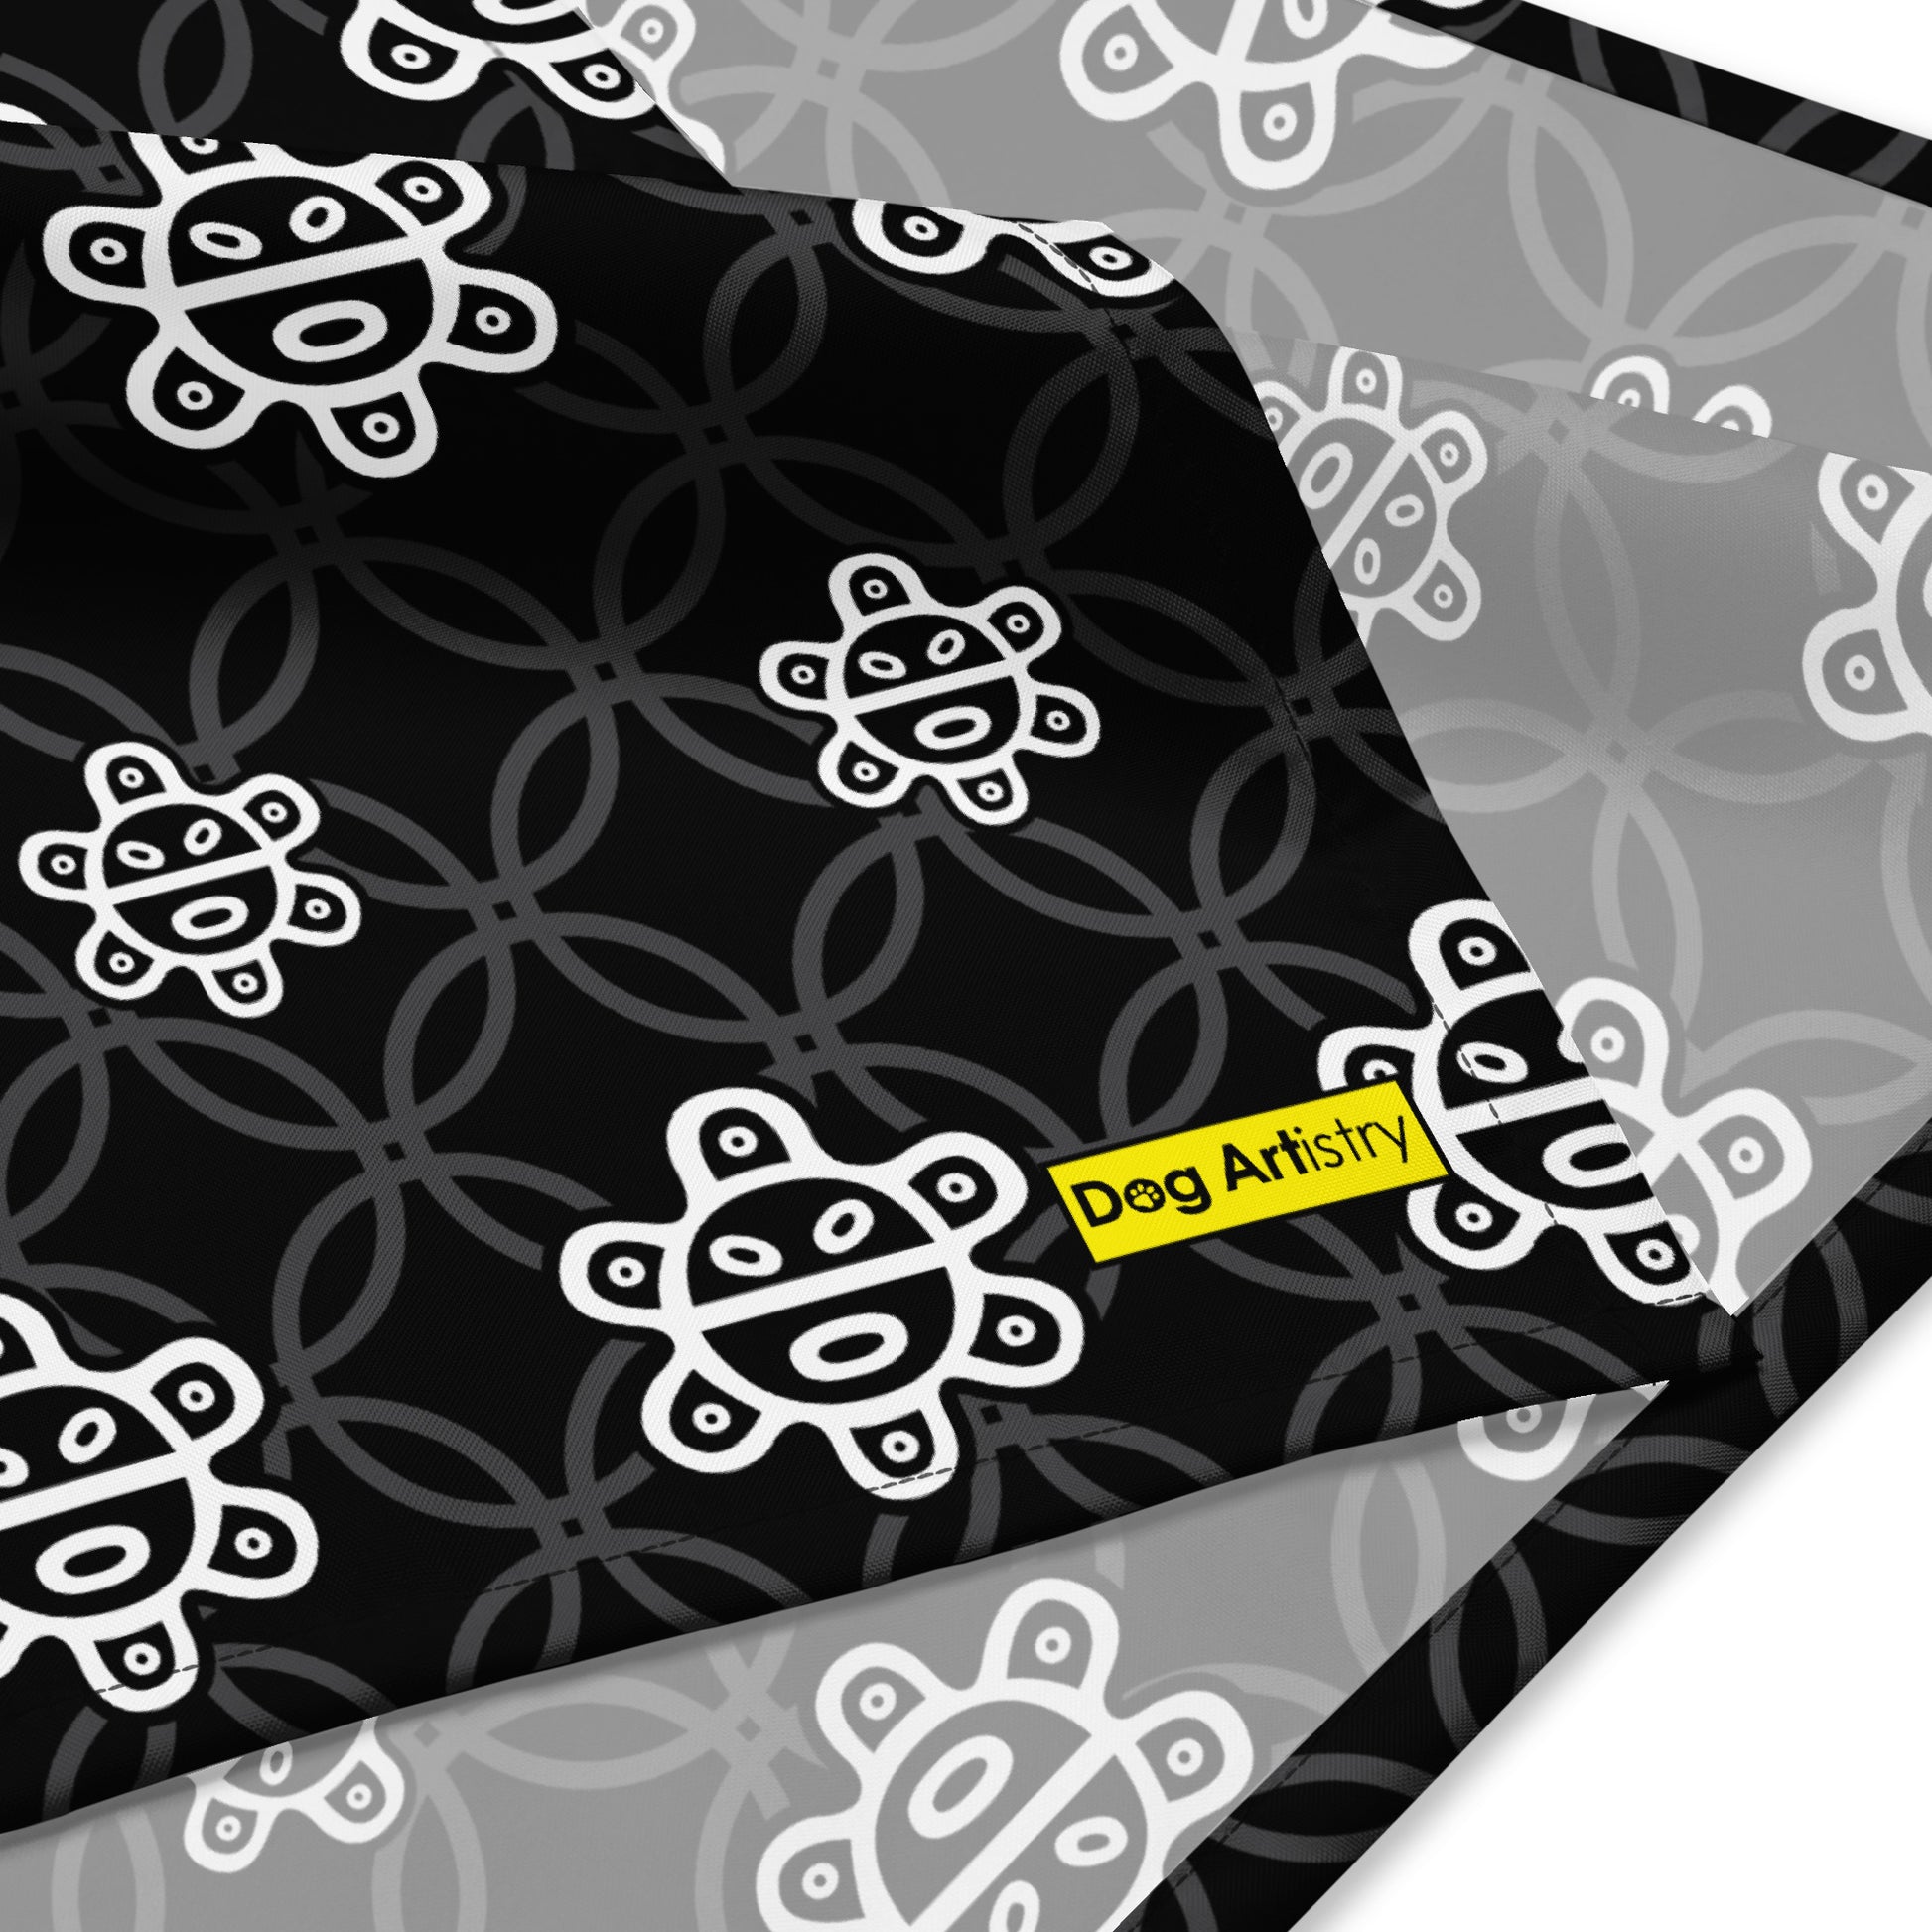 Taino Sun black bandana designed by Dog Artistry.